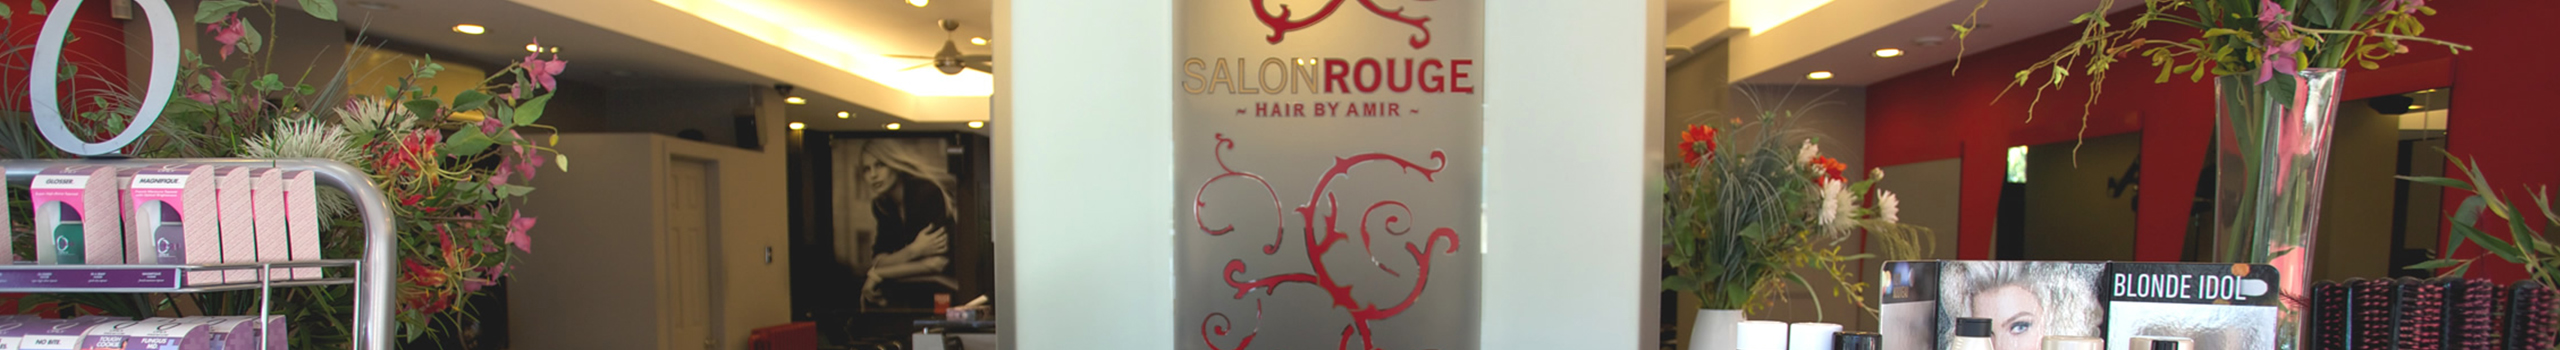 Salon Rouge  Ottawa Hair Salon About us Banner image